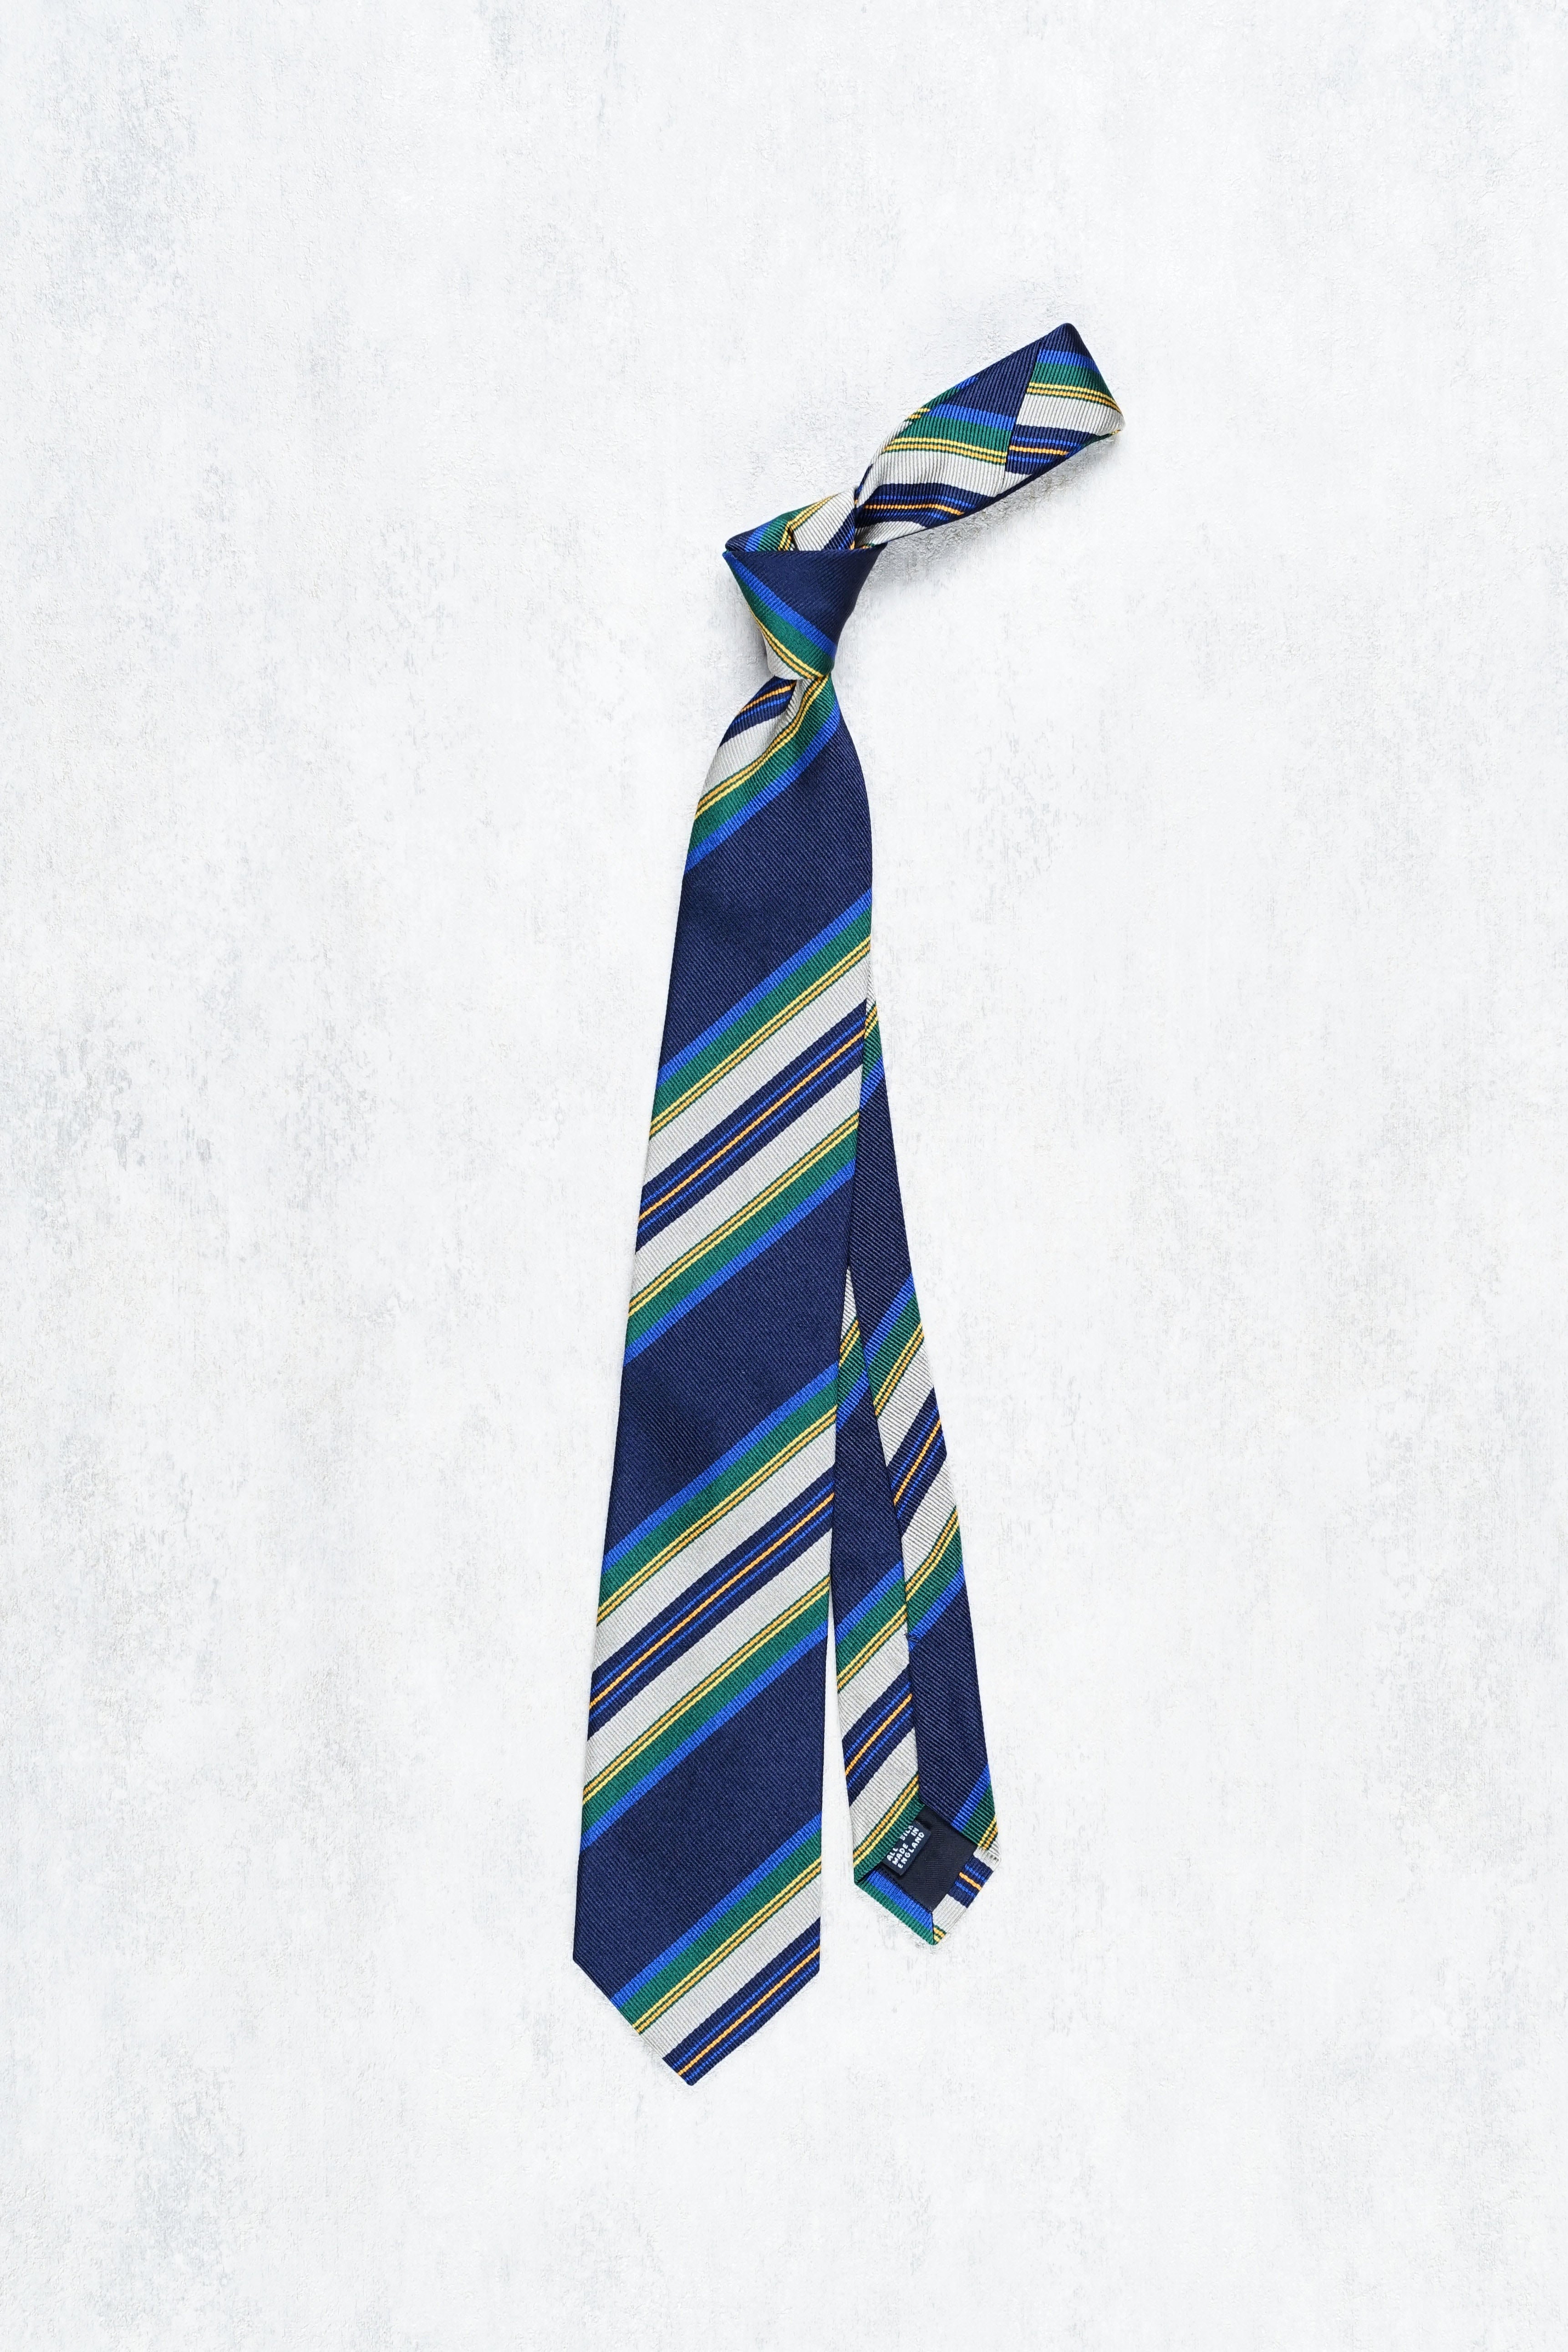 Drake's Navy with Green/Grey/Yellow/Orange/Blue Stripe Silk Tie